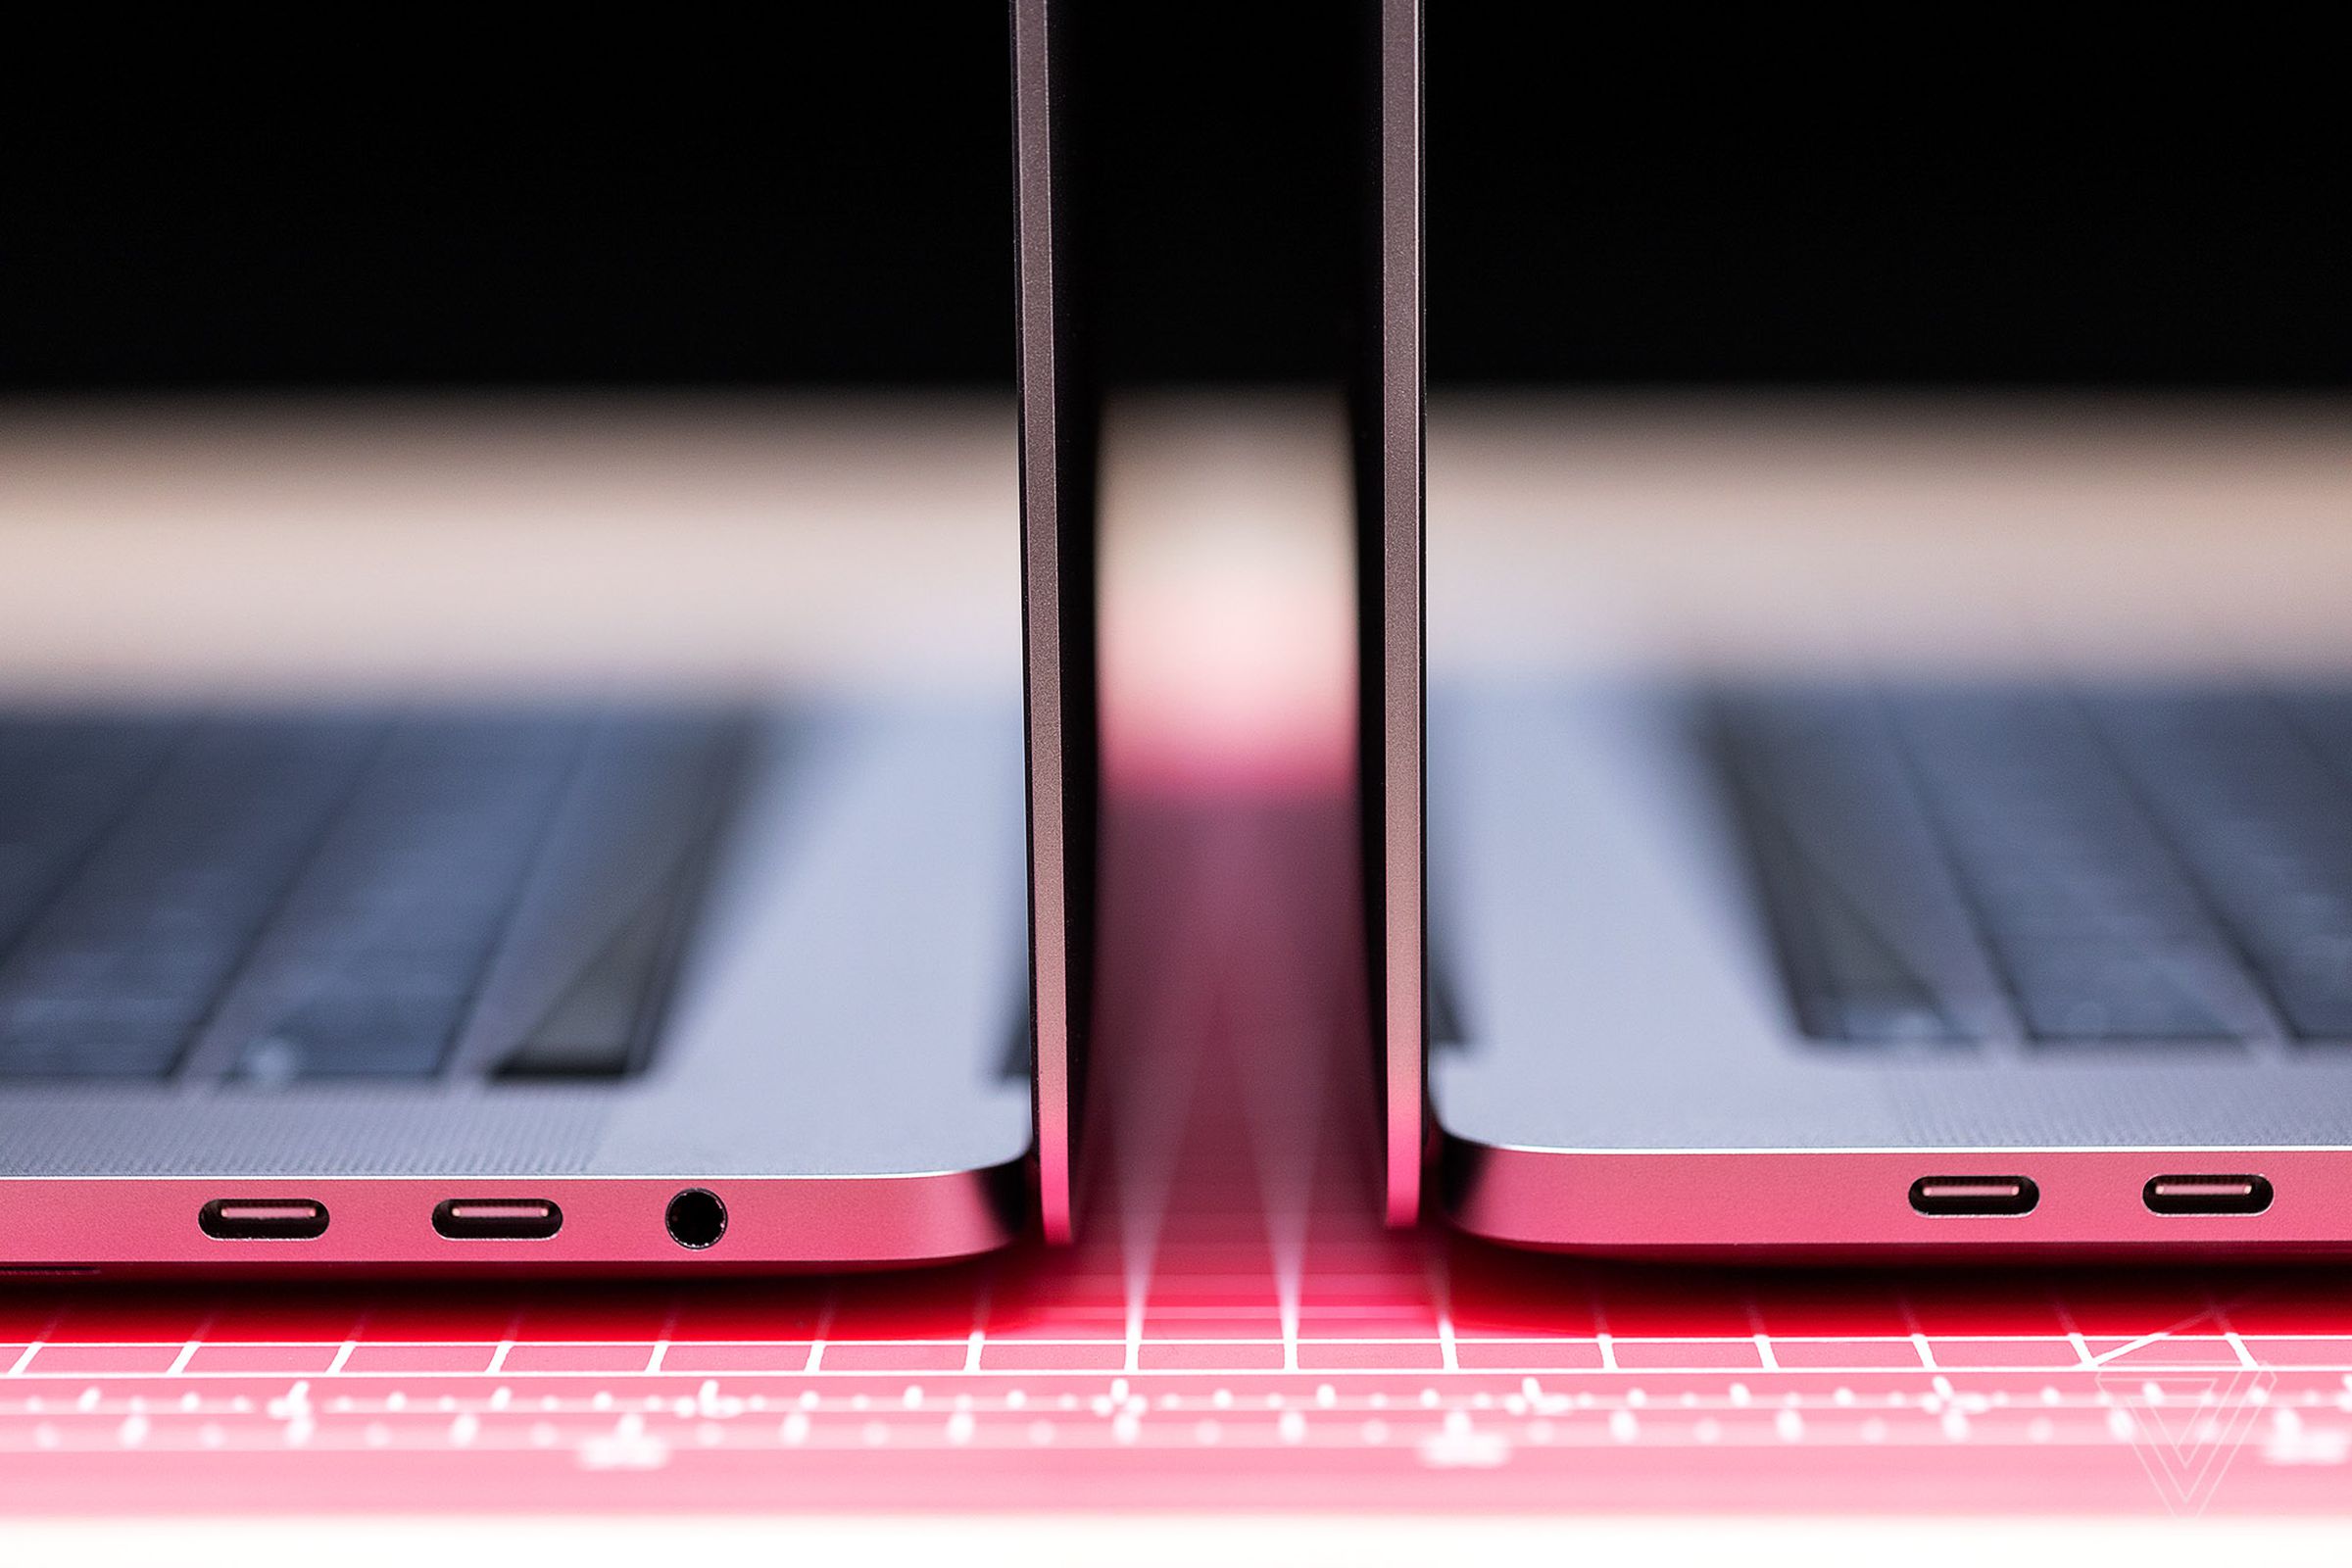 15-inch MacBook Pro (2018) left vs 16-inch MacBook Pro (2019) right